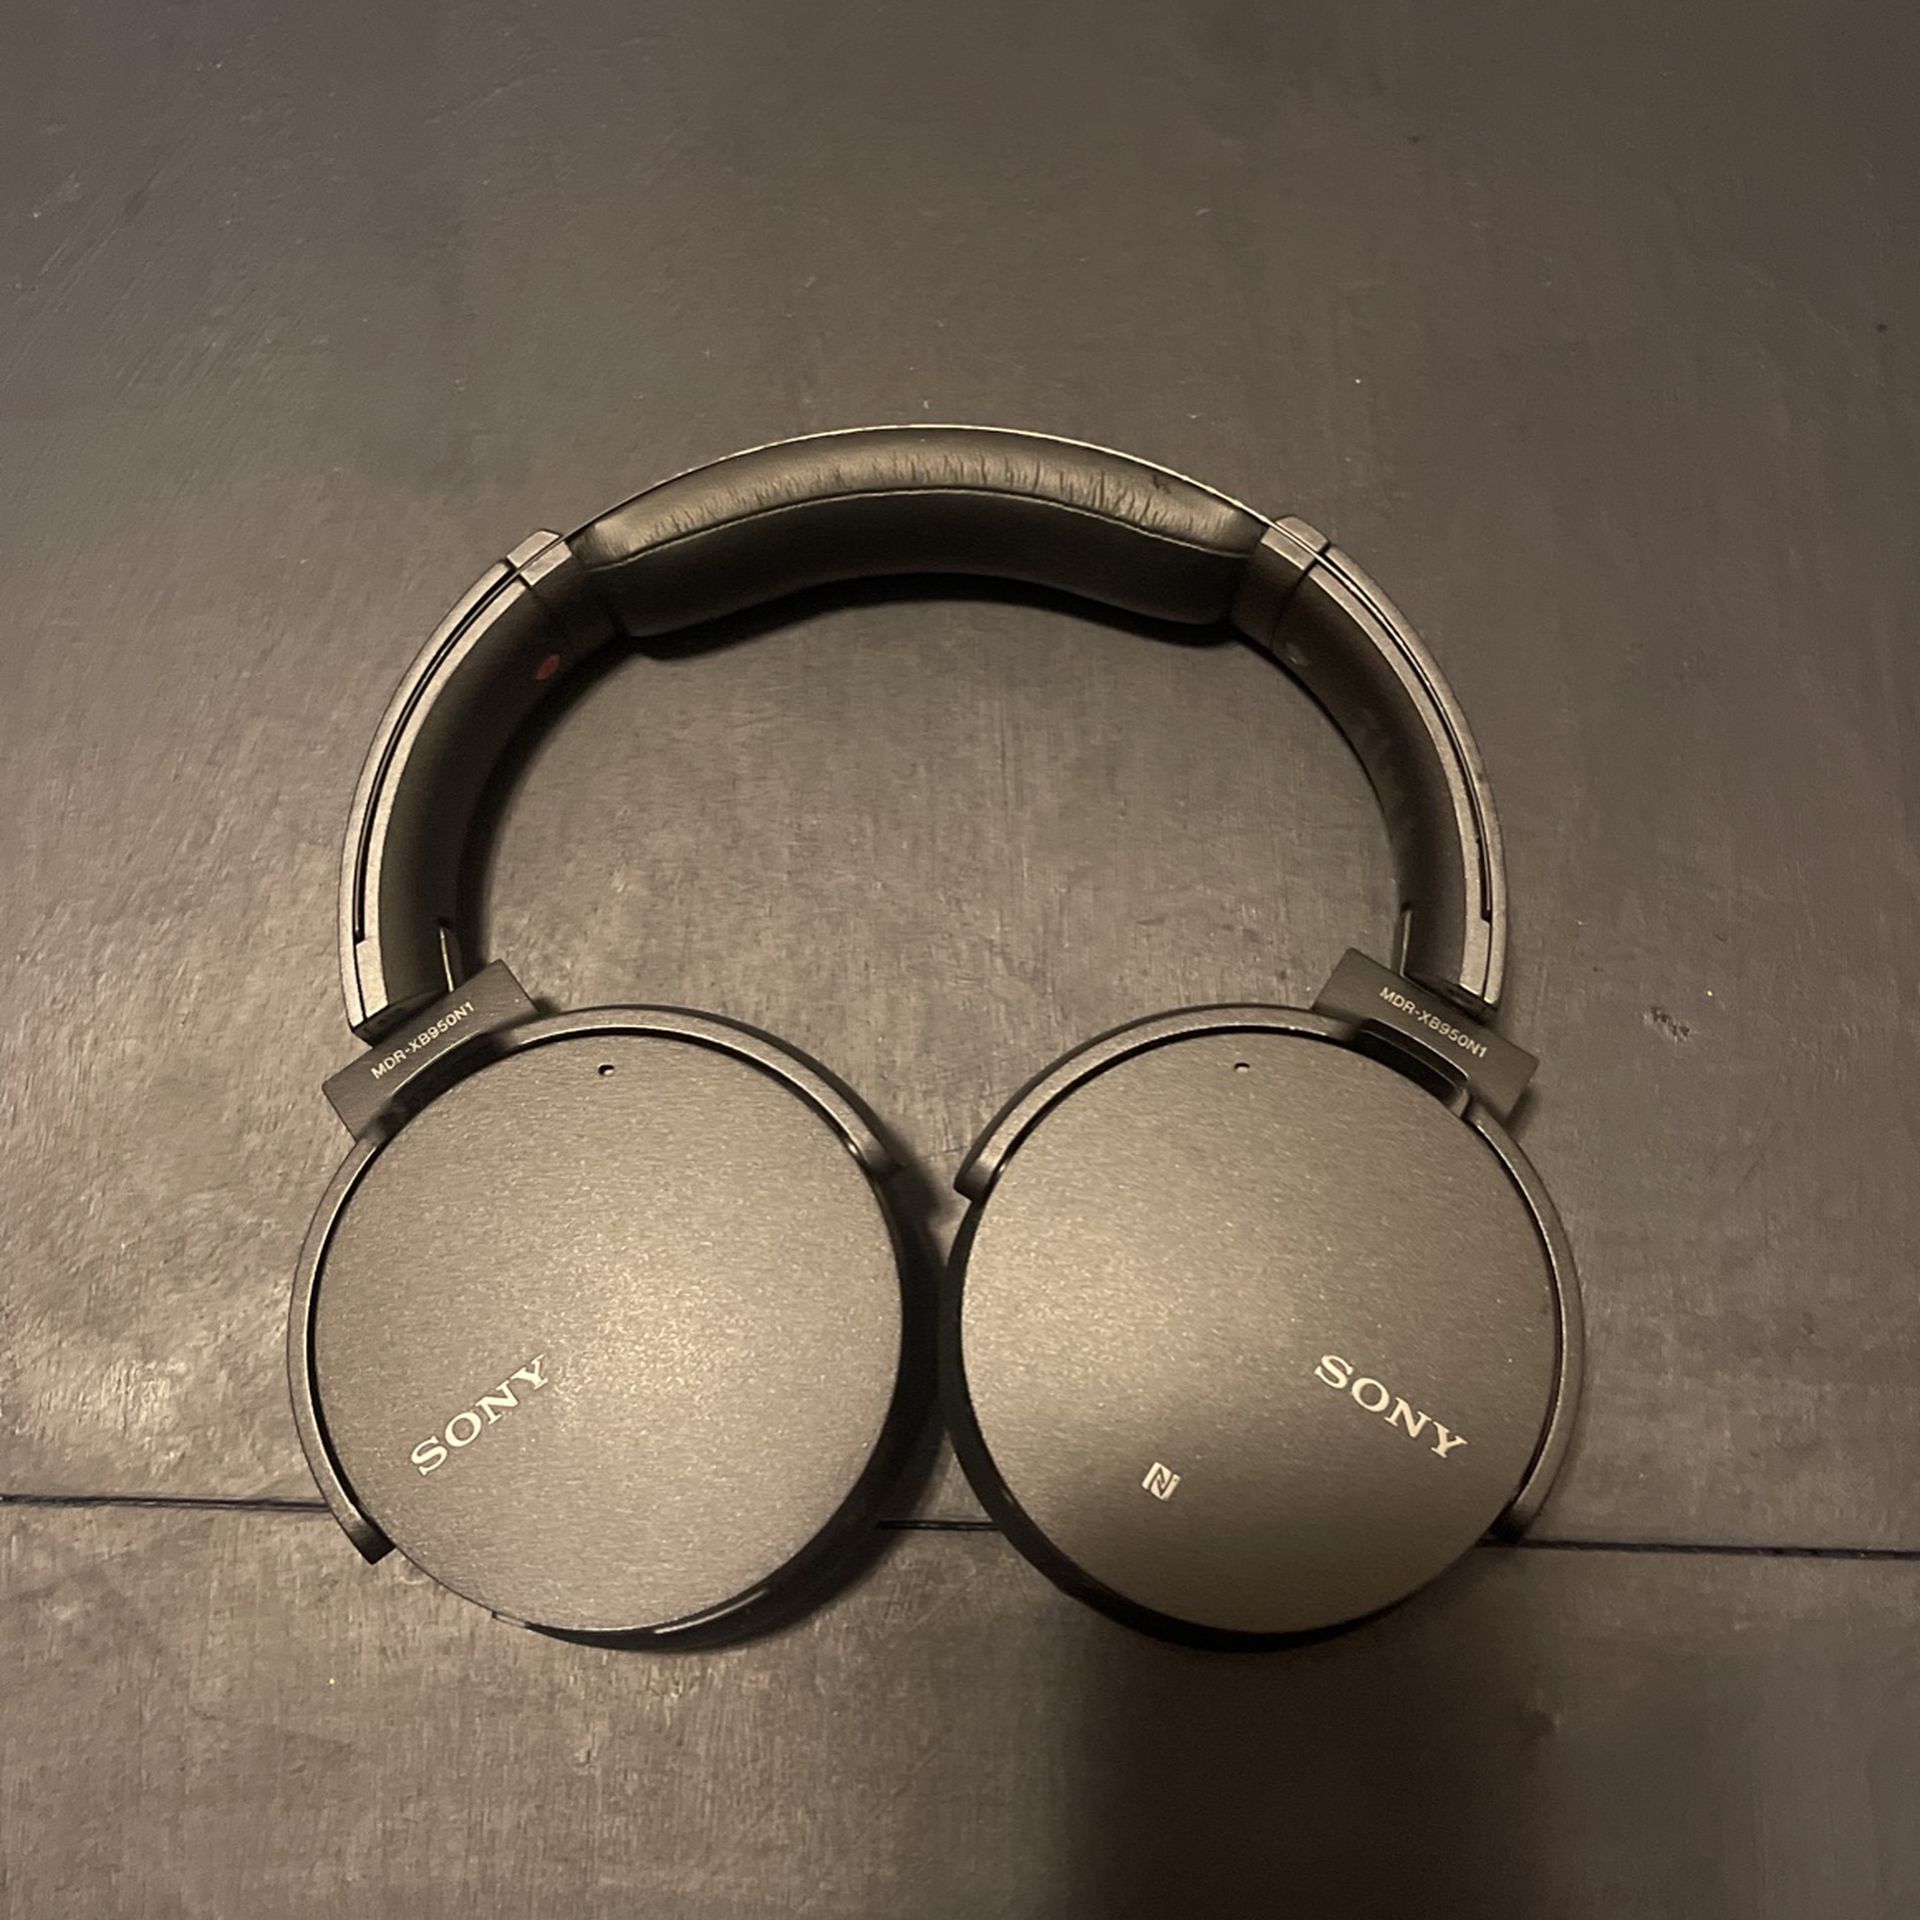 Sony Bass Boost Headphones Model: Mdrxb950n1